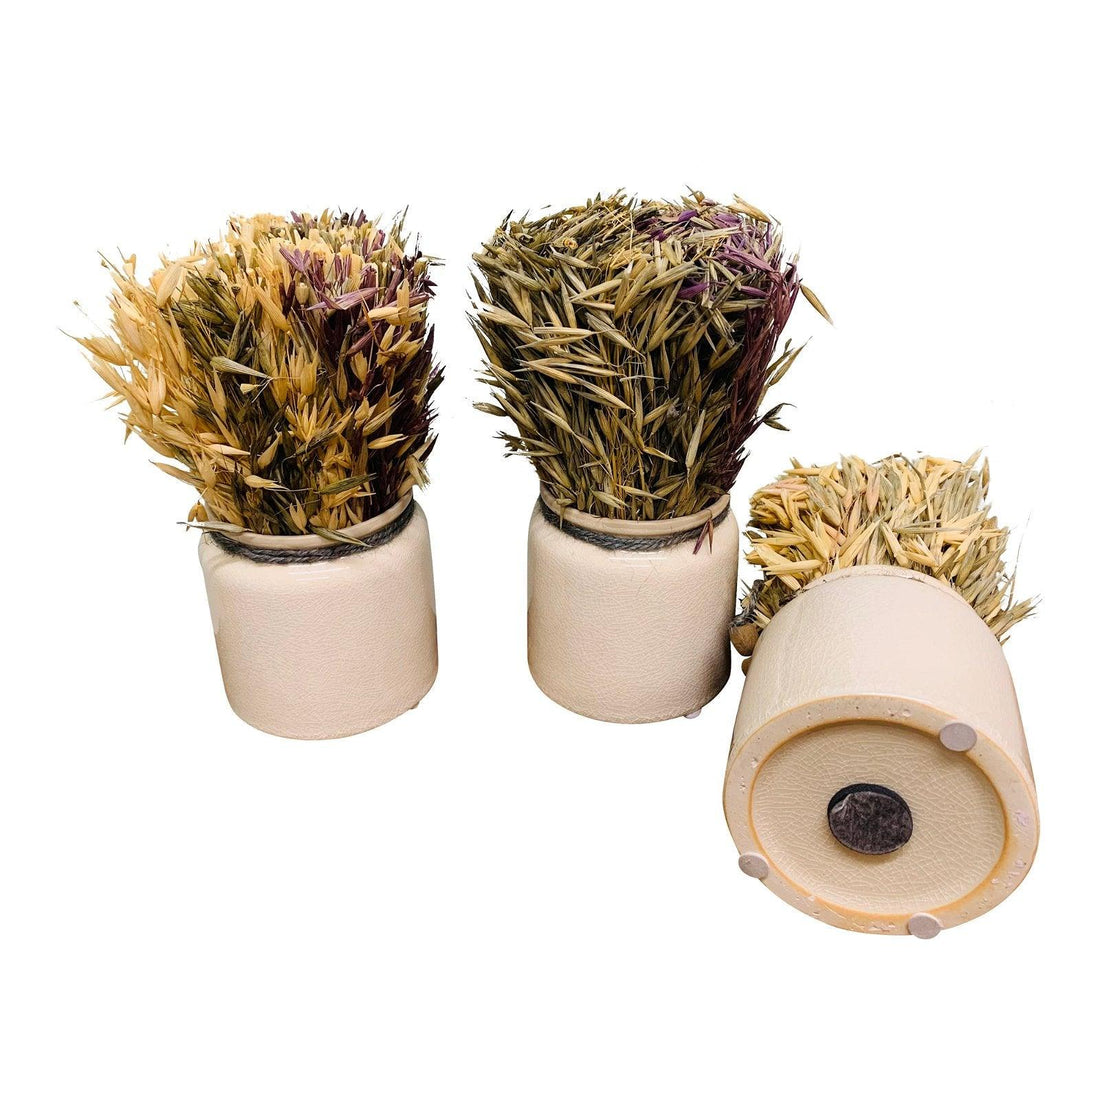 Set of 3 Dried Grasses In Ceramic Pots - £60.99 - Small Succulents & Faux Bonsai 